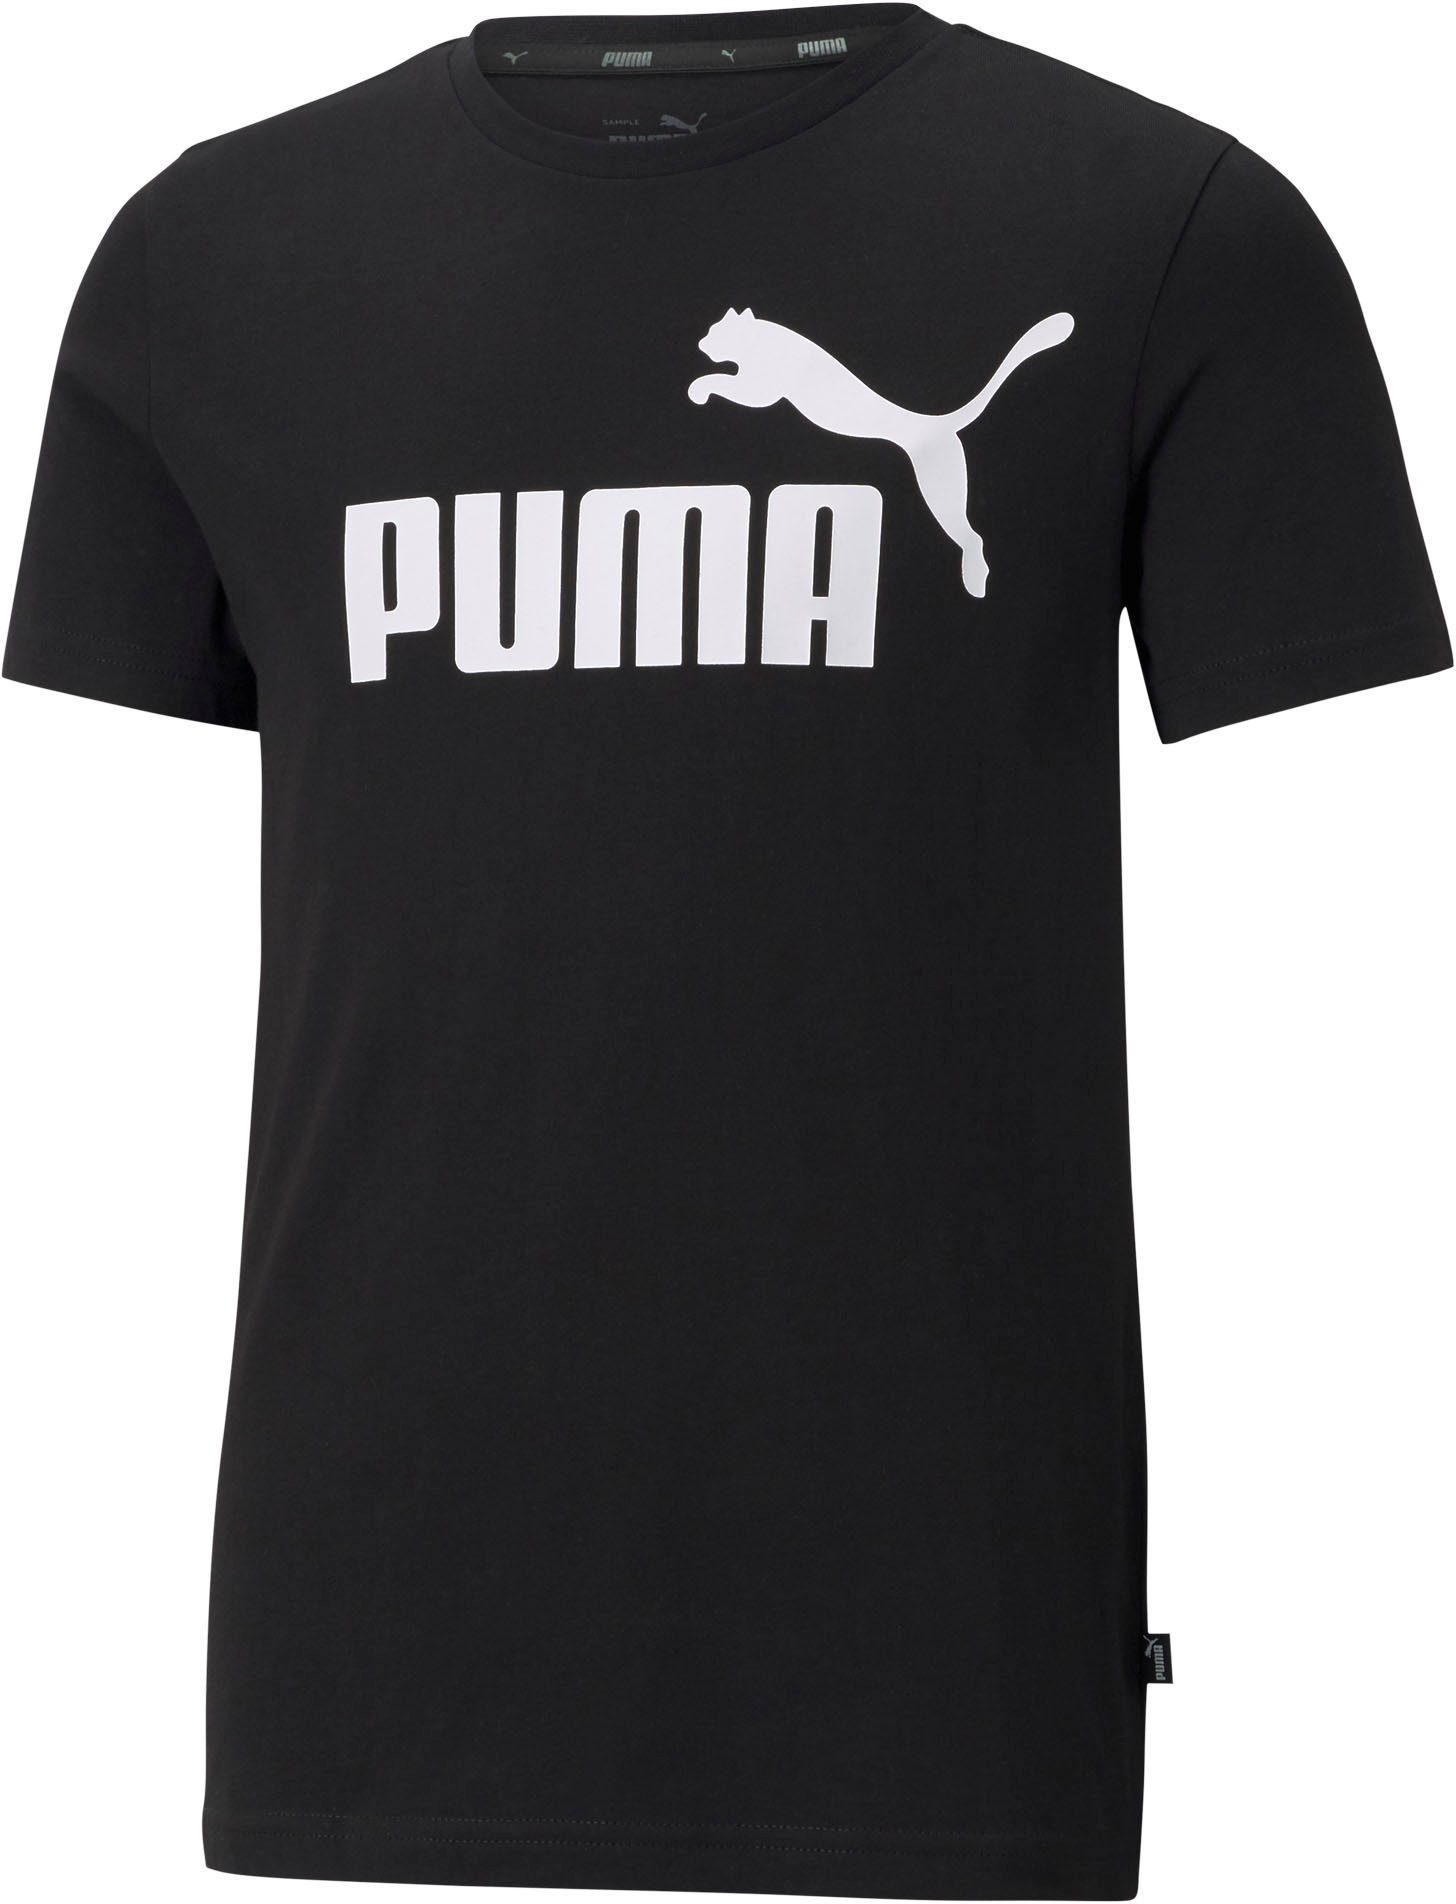 ESS PUMA Puma B T-Shirt Black LOGO TEE